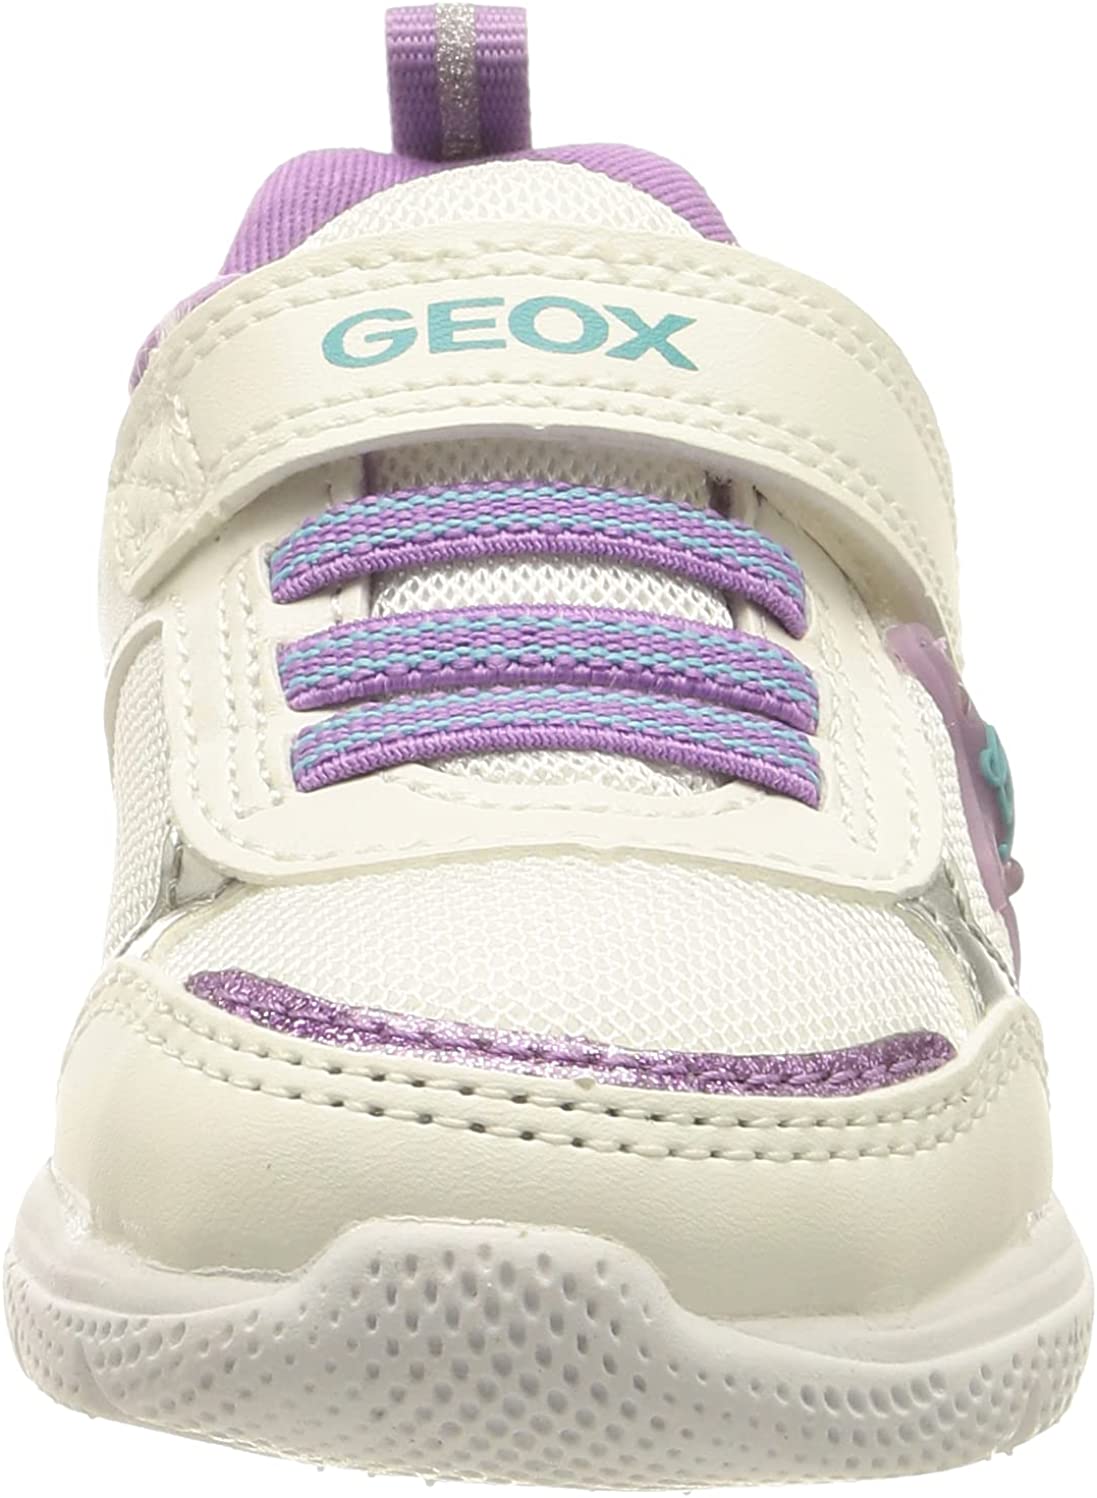 Geox Girl D, Sneakers para Bebé Niña